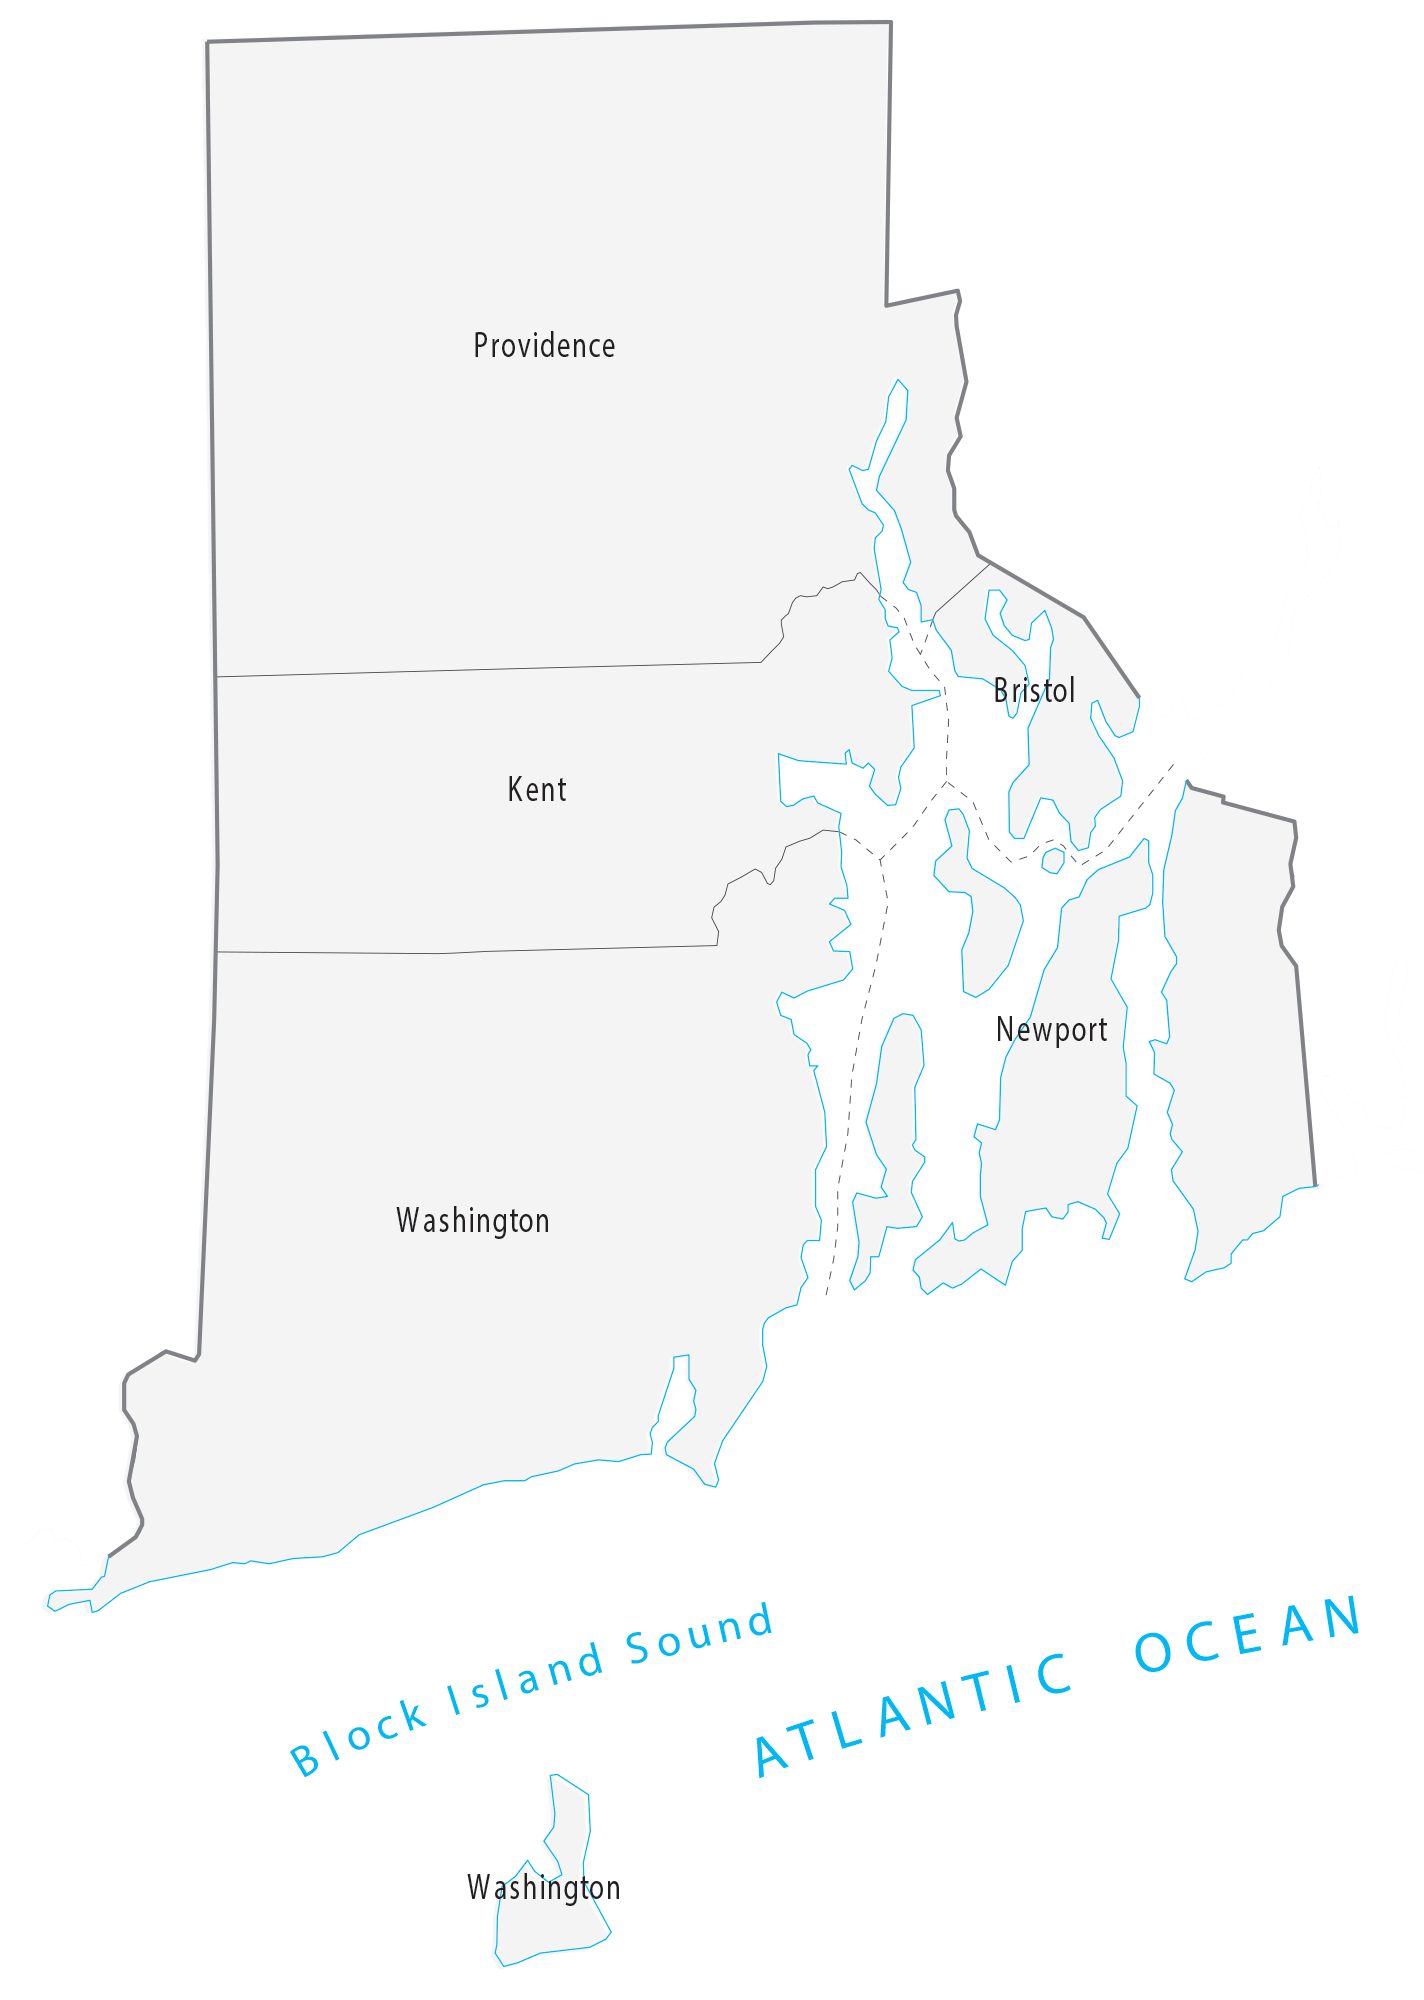 Rhode Island County Map